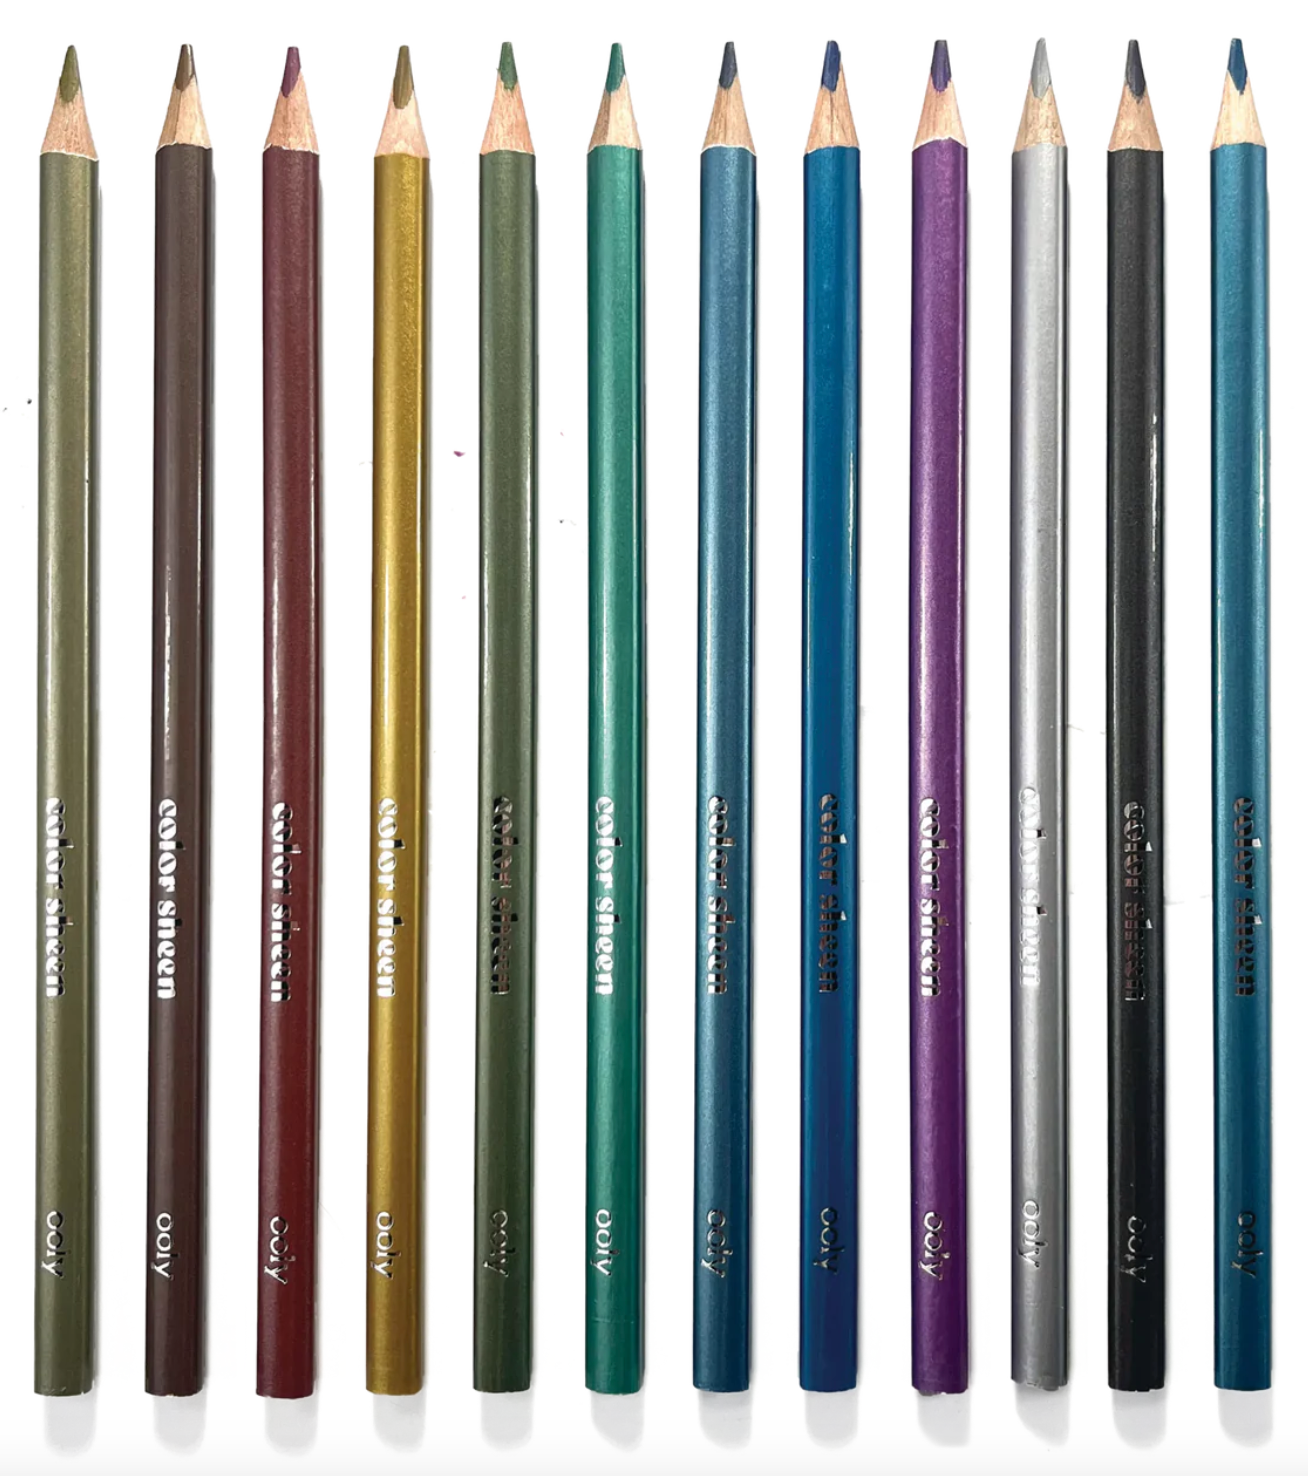 Color Sheen Metallic Colored Pencils - Set of 12